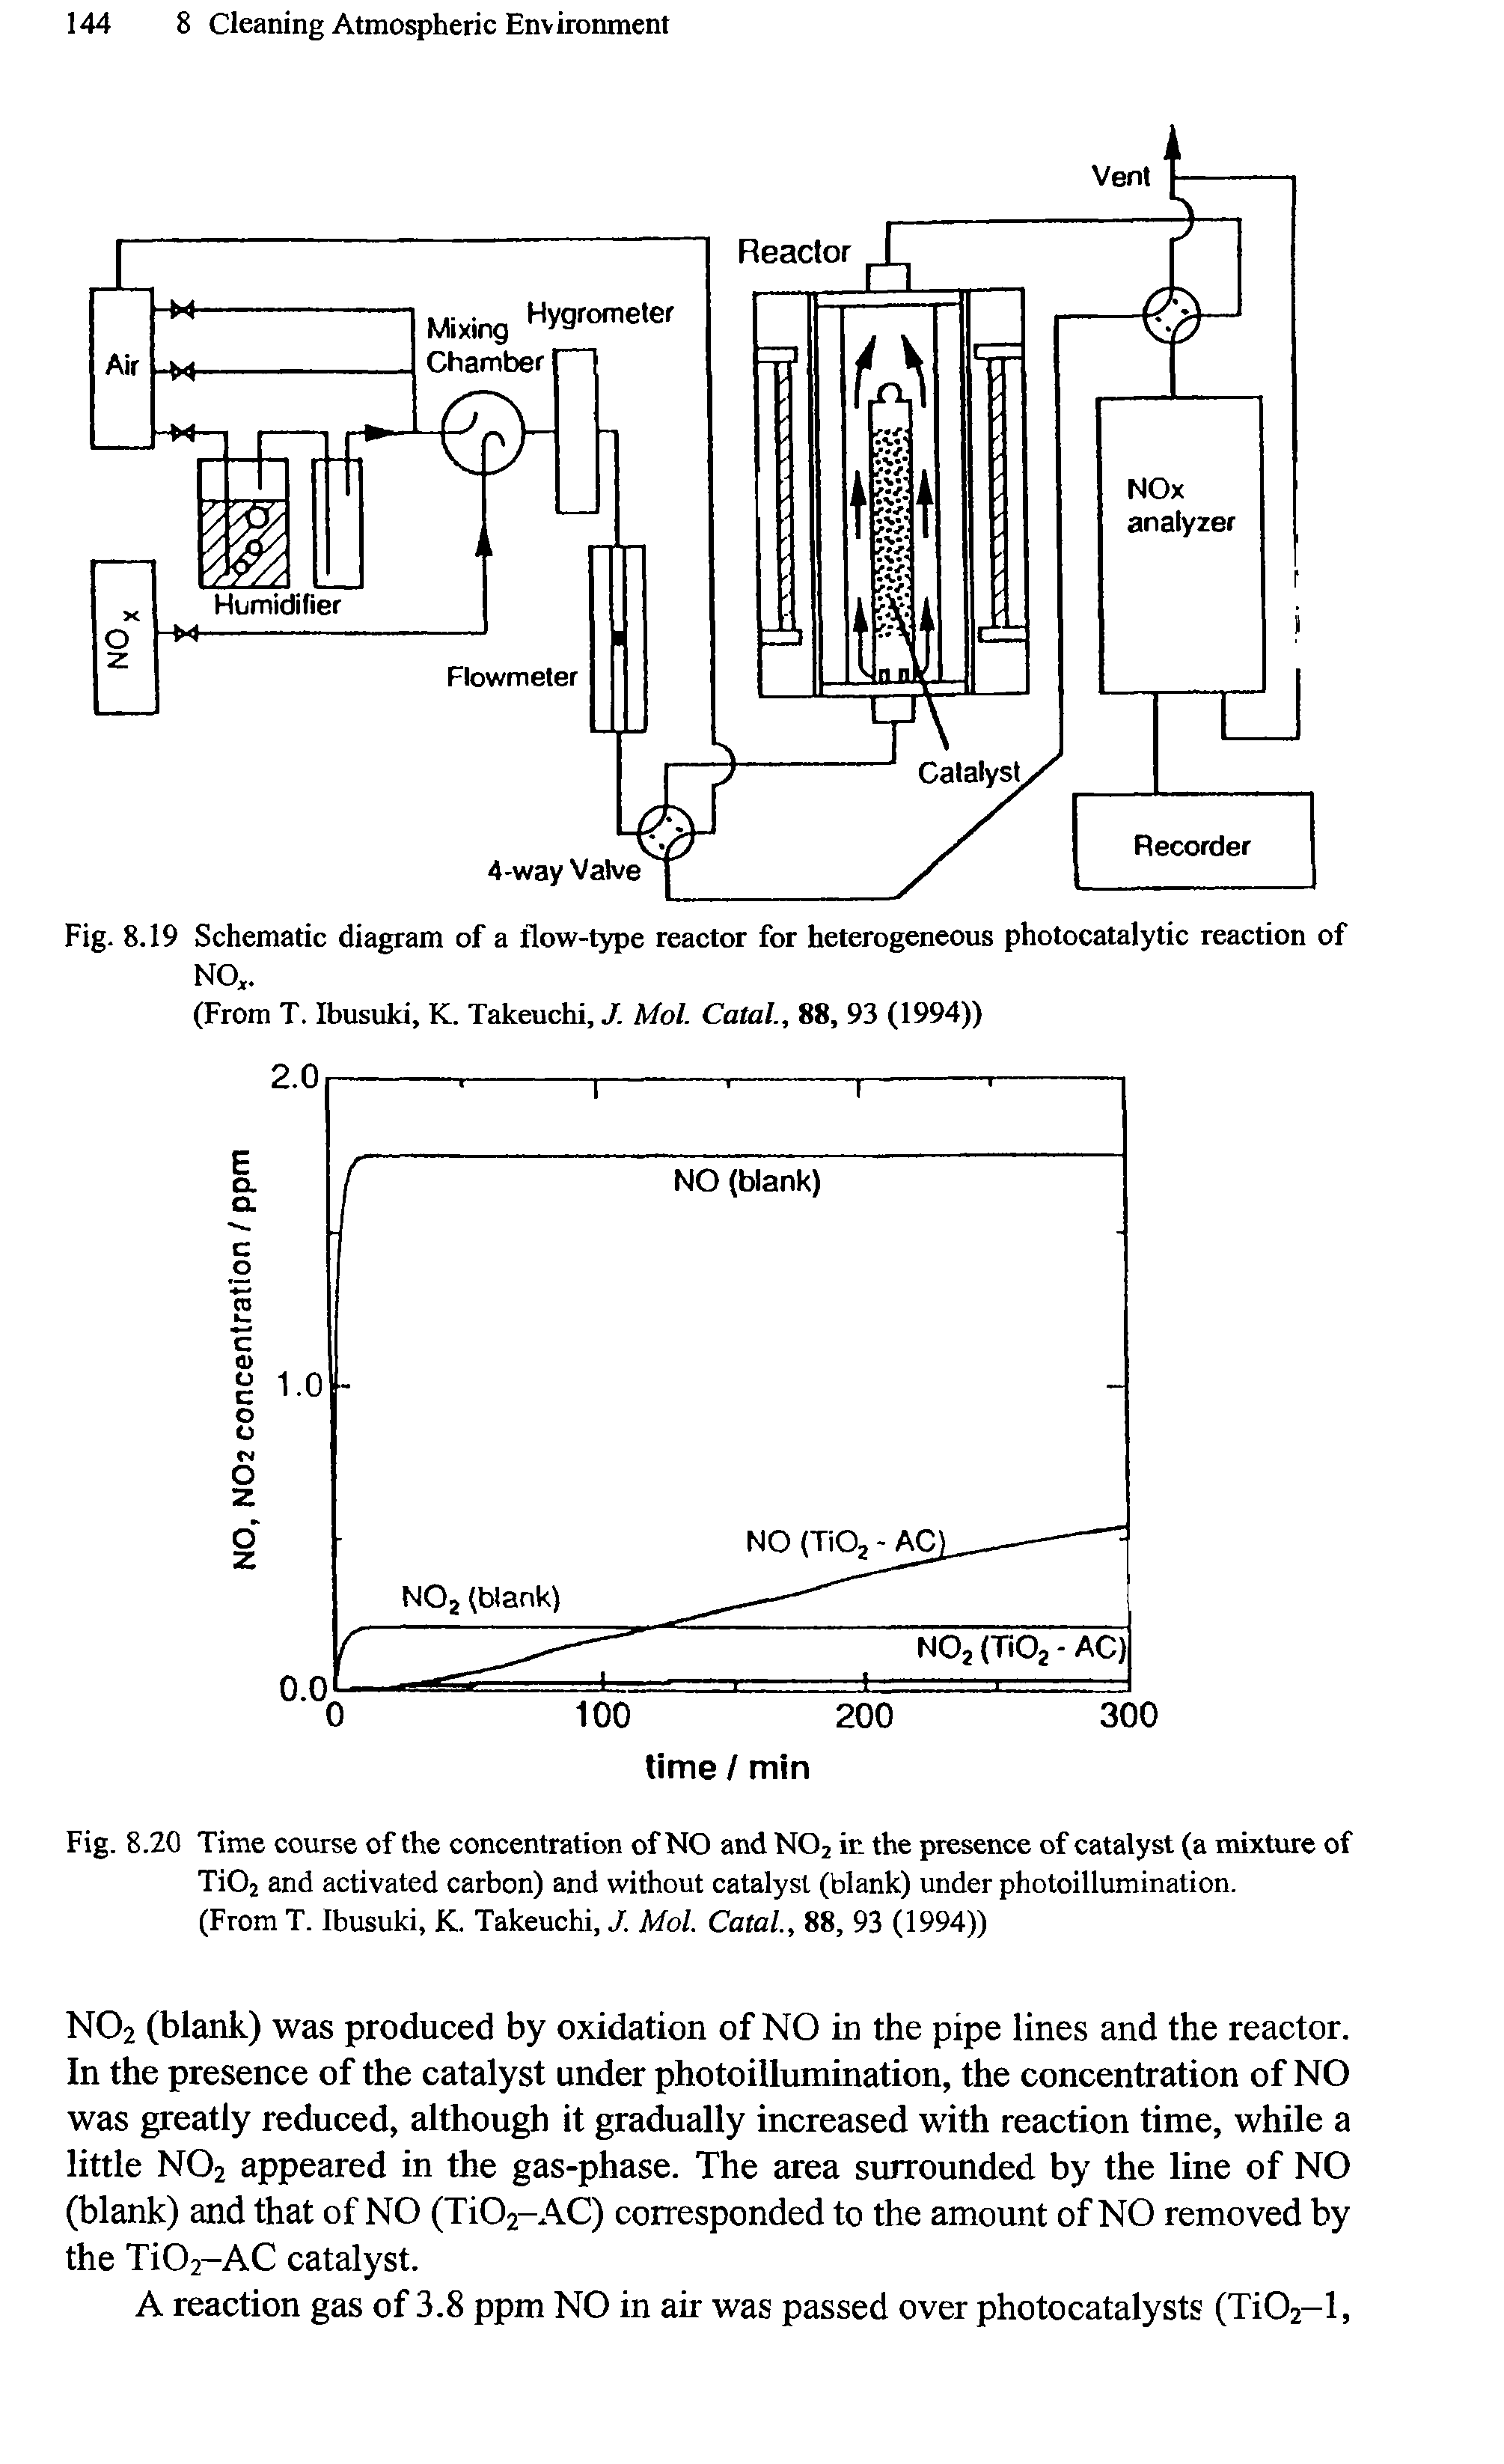 Fig. 8.19 Schematic diagram of a flow-type reactor for heterogeneous photocatalytic reaction of NO,.